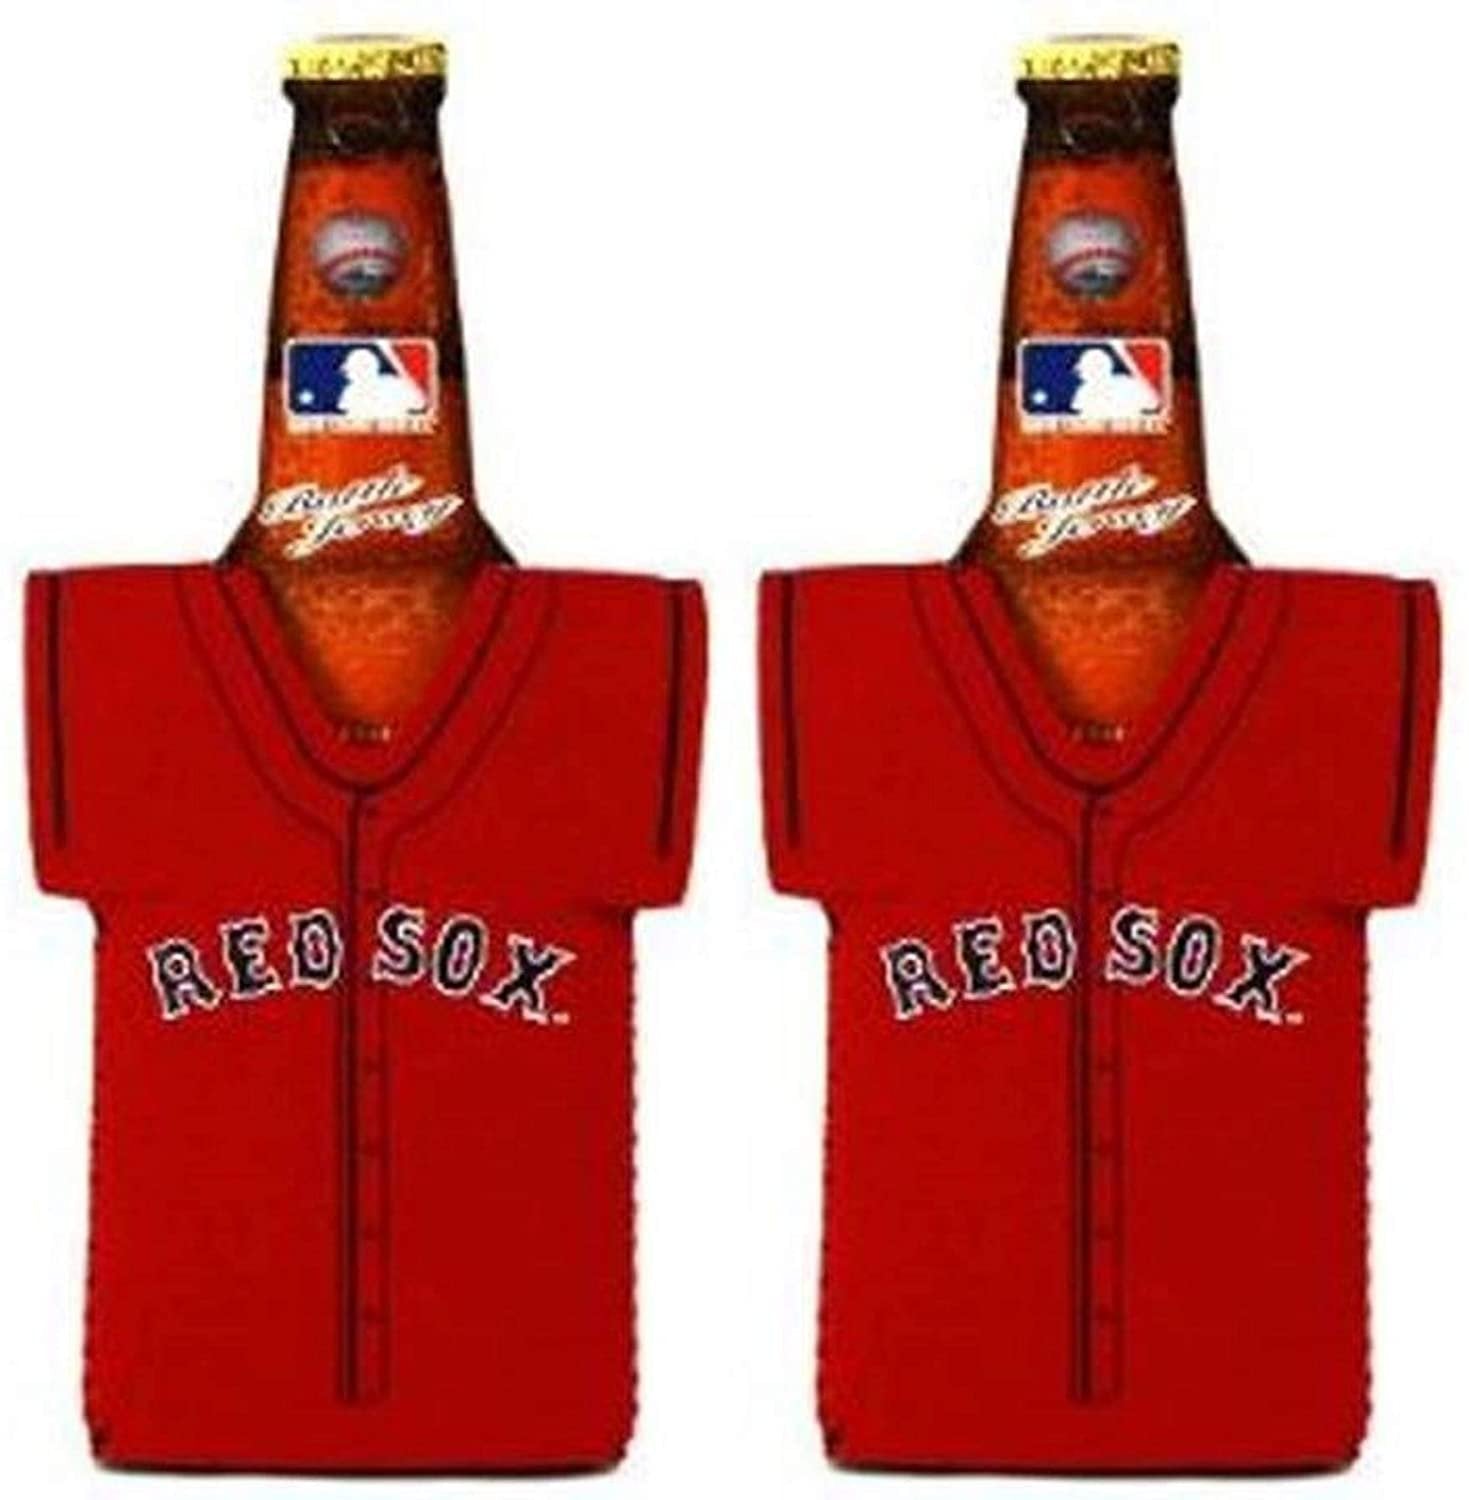 Boston Red Sox Pair of 16oz Drink Bottle Cooler Insulated Neoprene Beverage Holder, Team Jersey Design